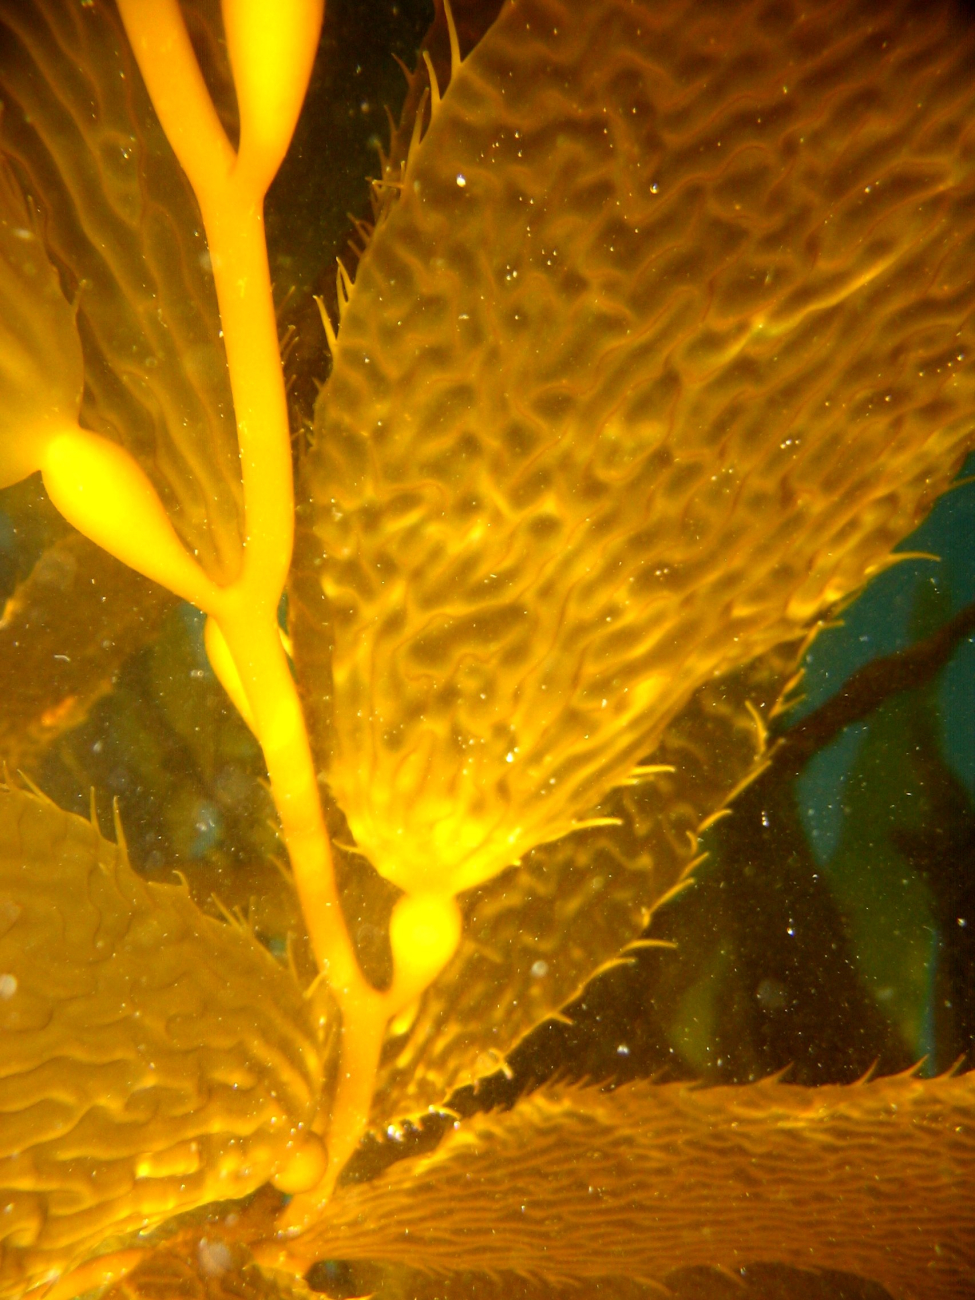 Giant kelp (Macrocystis pyrifera)